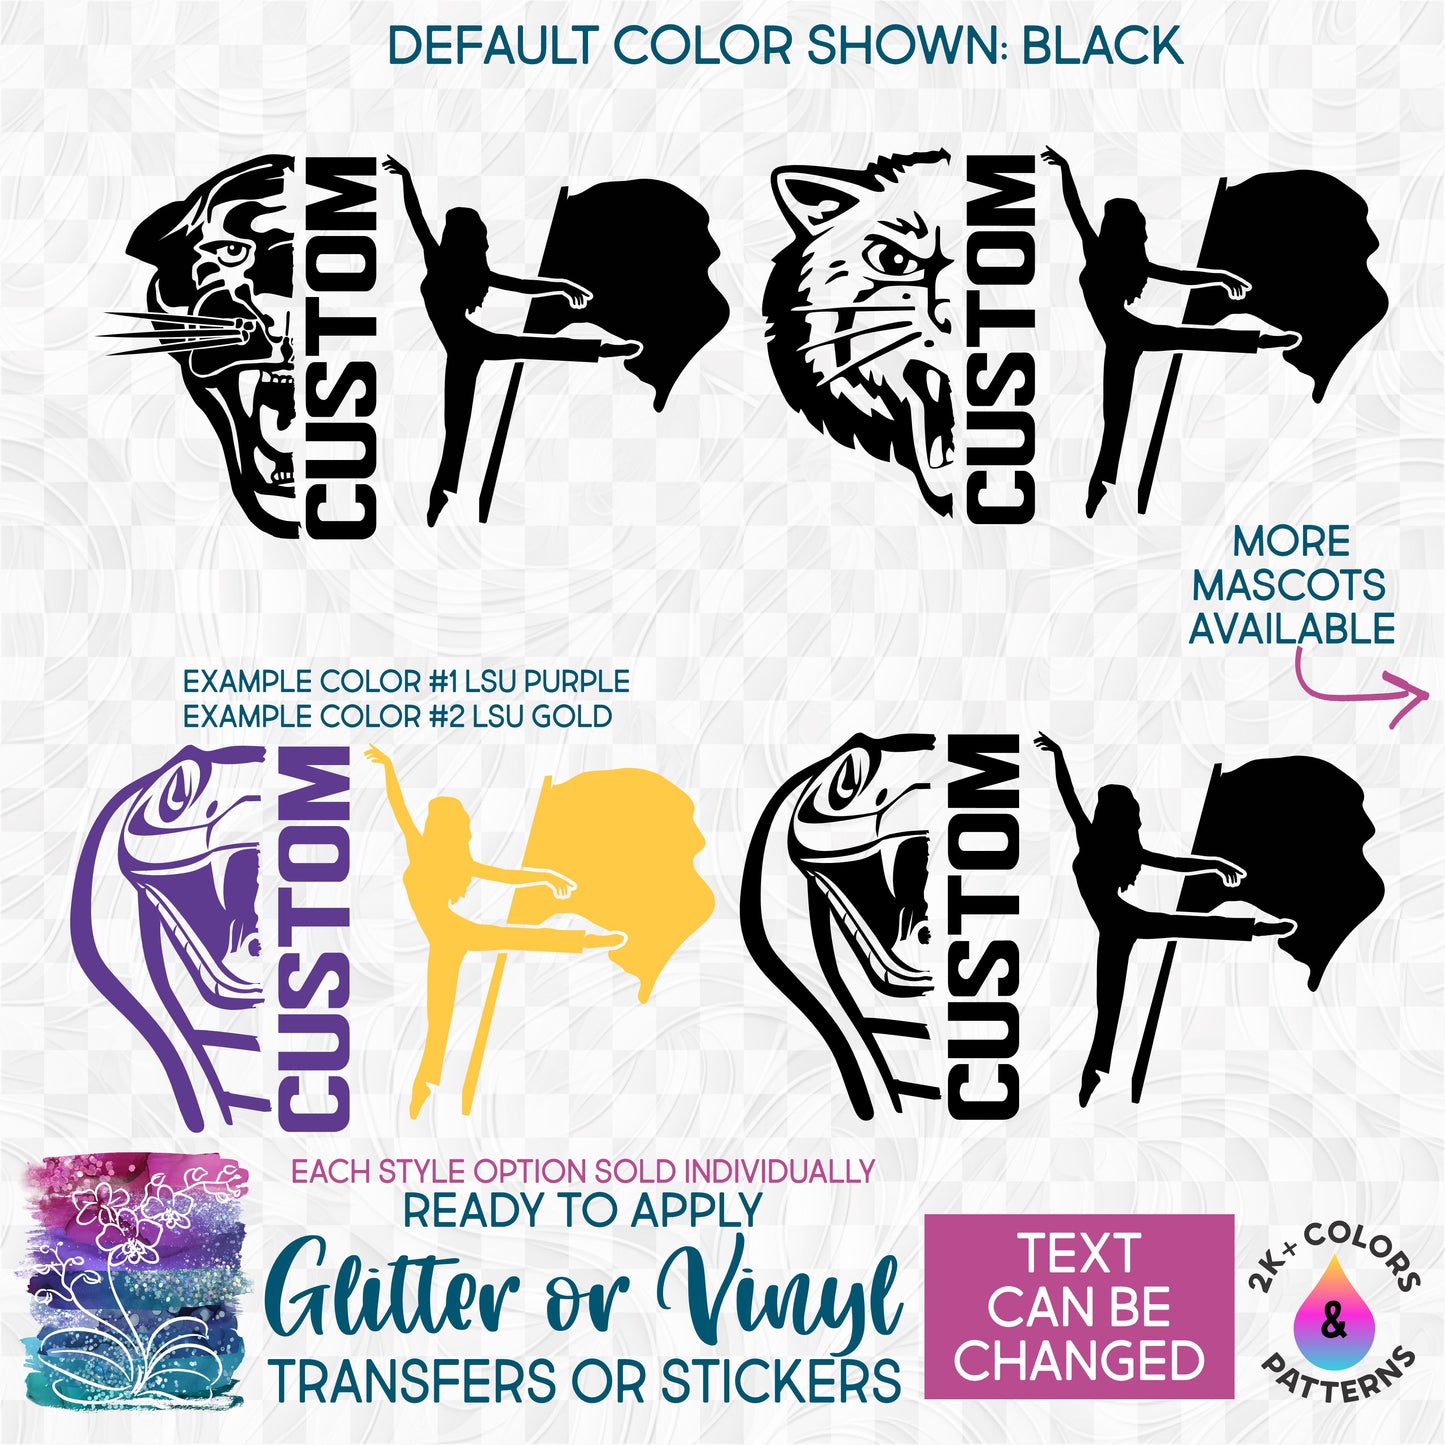 (s317-S) Split Colorguard Color Guard Mascot Team Name Glitter or Vinyl Iron-On Transfer or Sticker